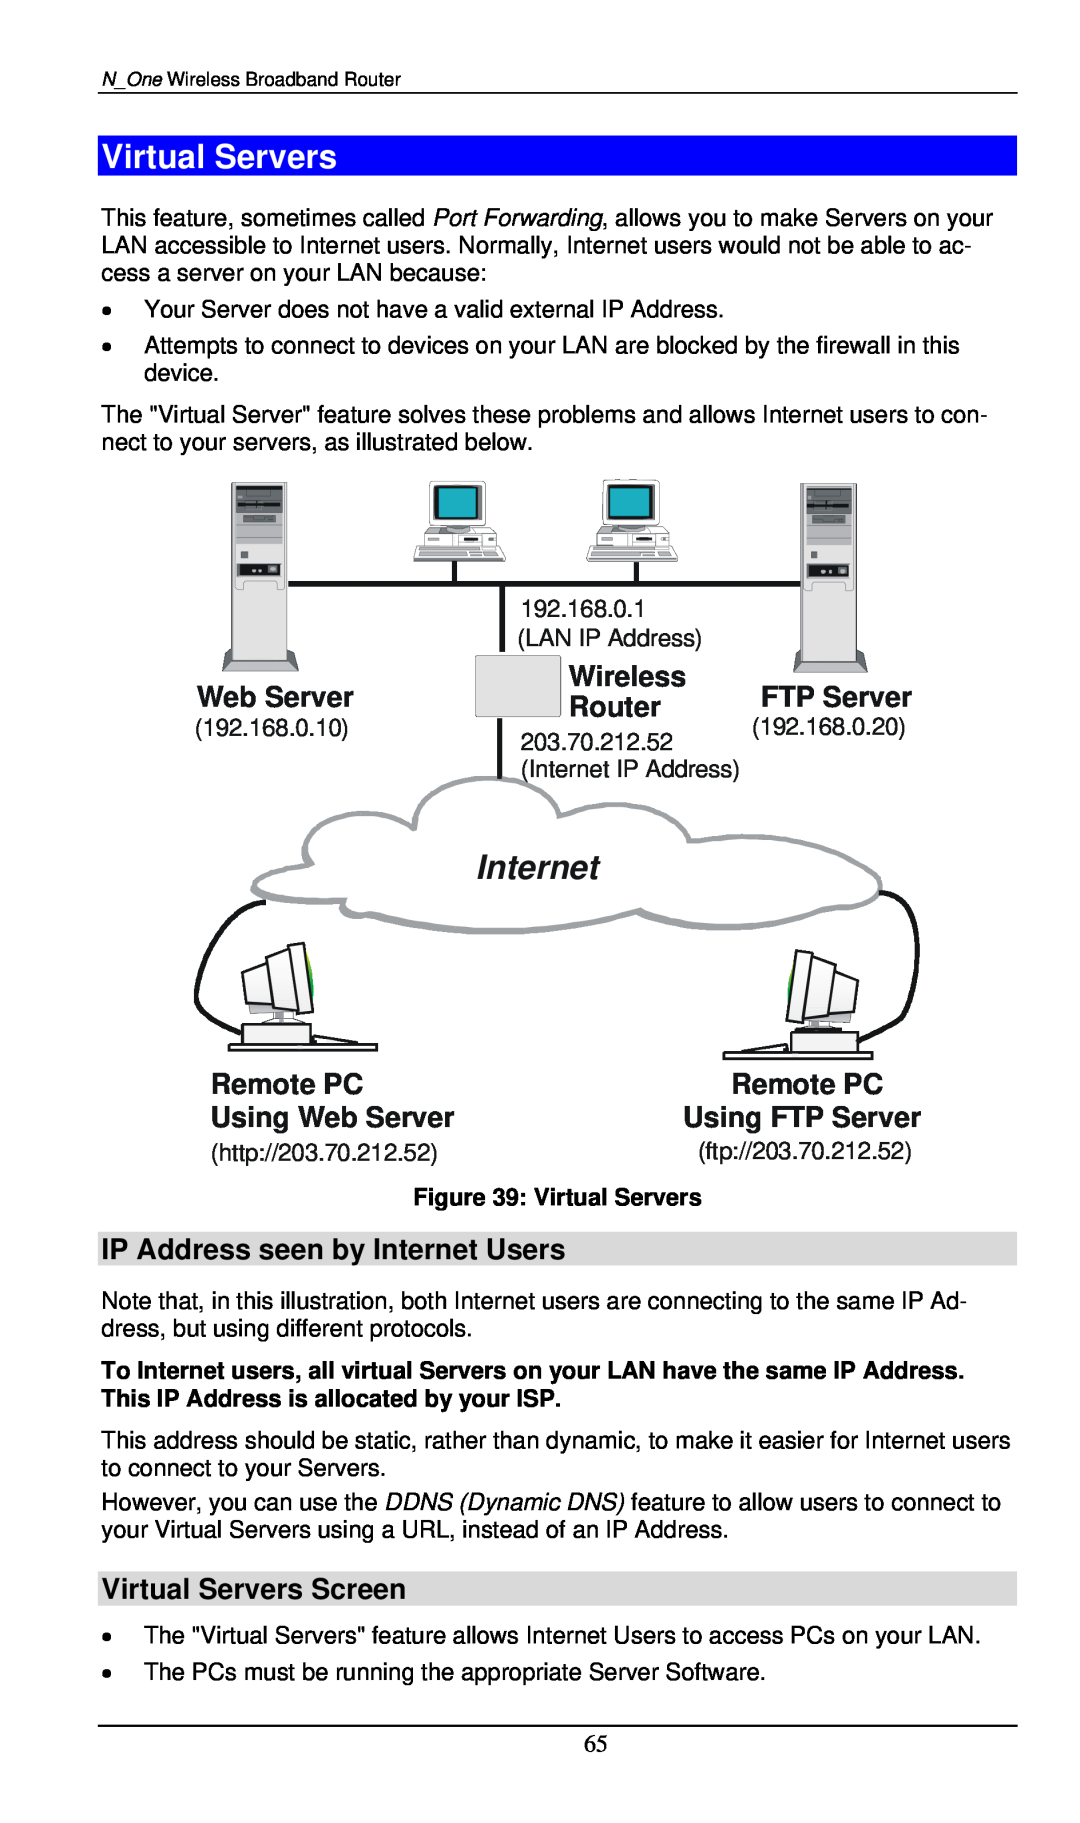 LevelOne WBR-6000 IP Address seen by Internet Users, Virtual Servers Screen, Web Server, Wireless, FTP Server, Router 